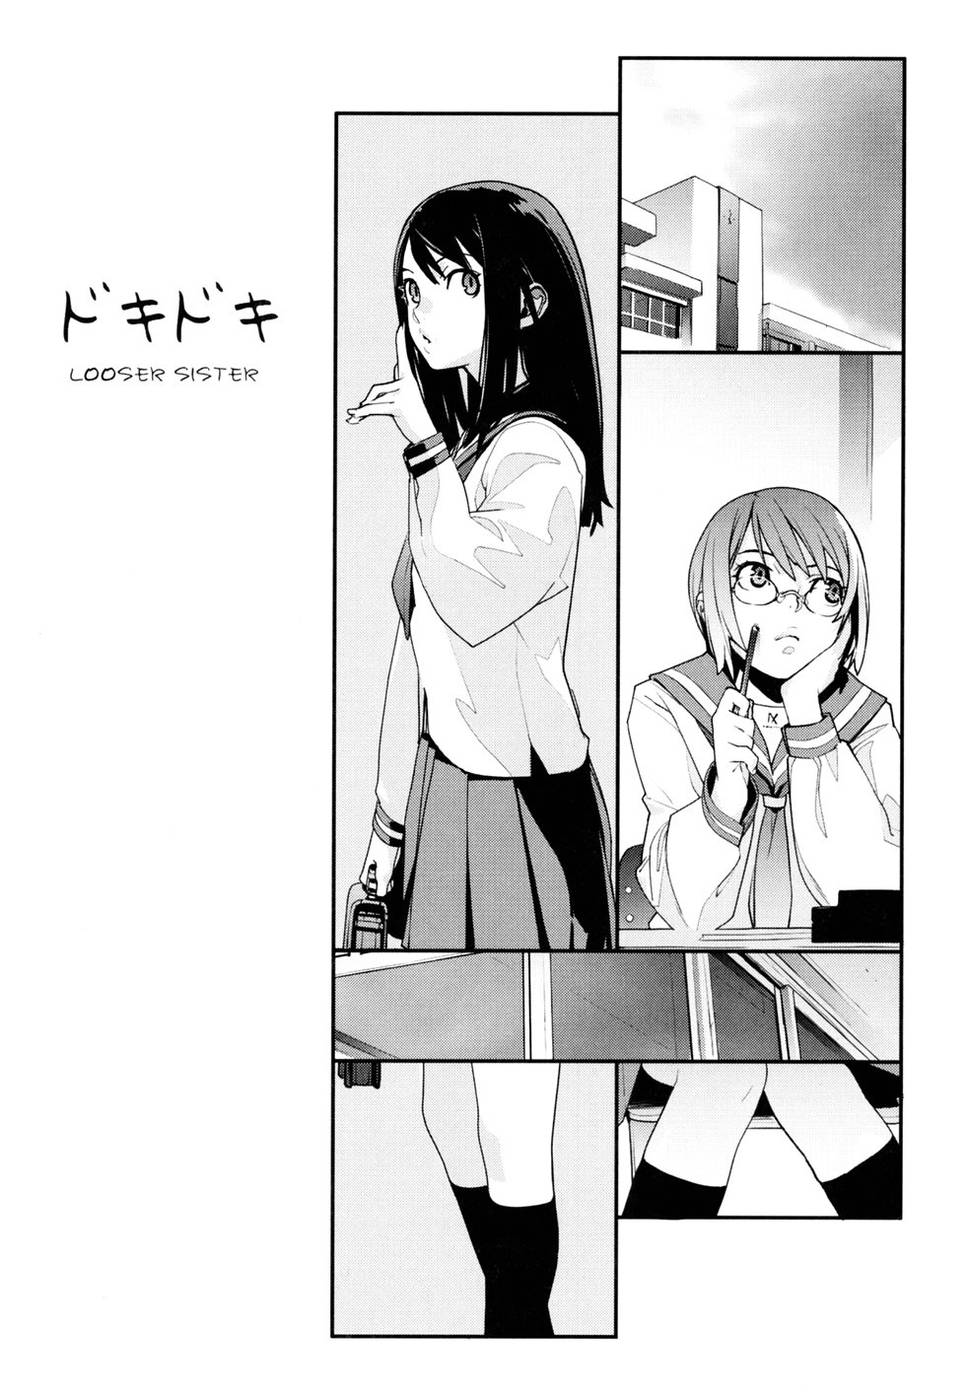 Hentai Manga Comic-Doki Doki - Looser Sister-Read-1